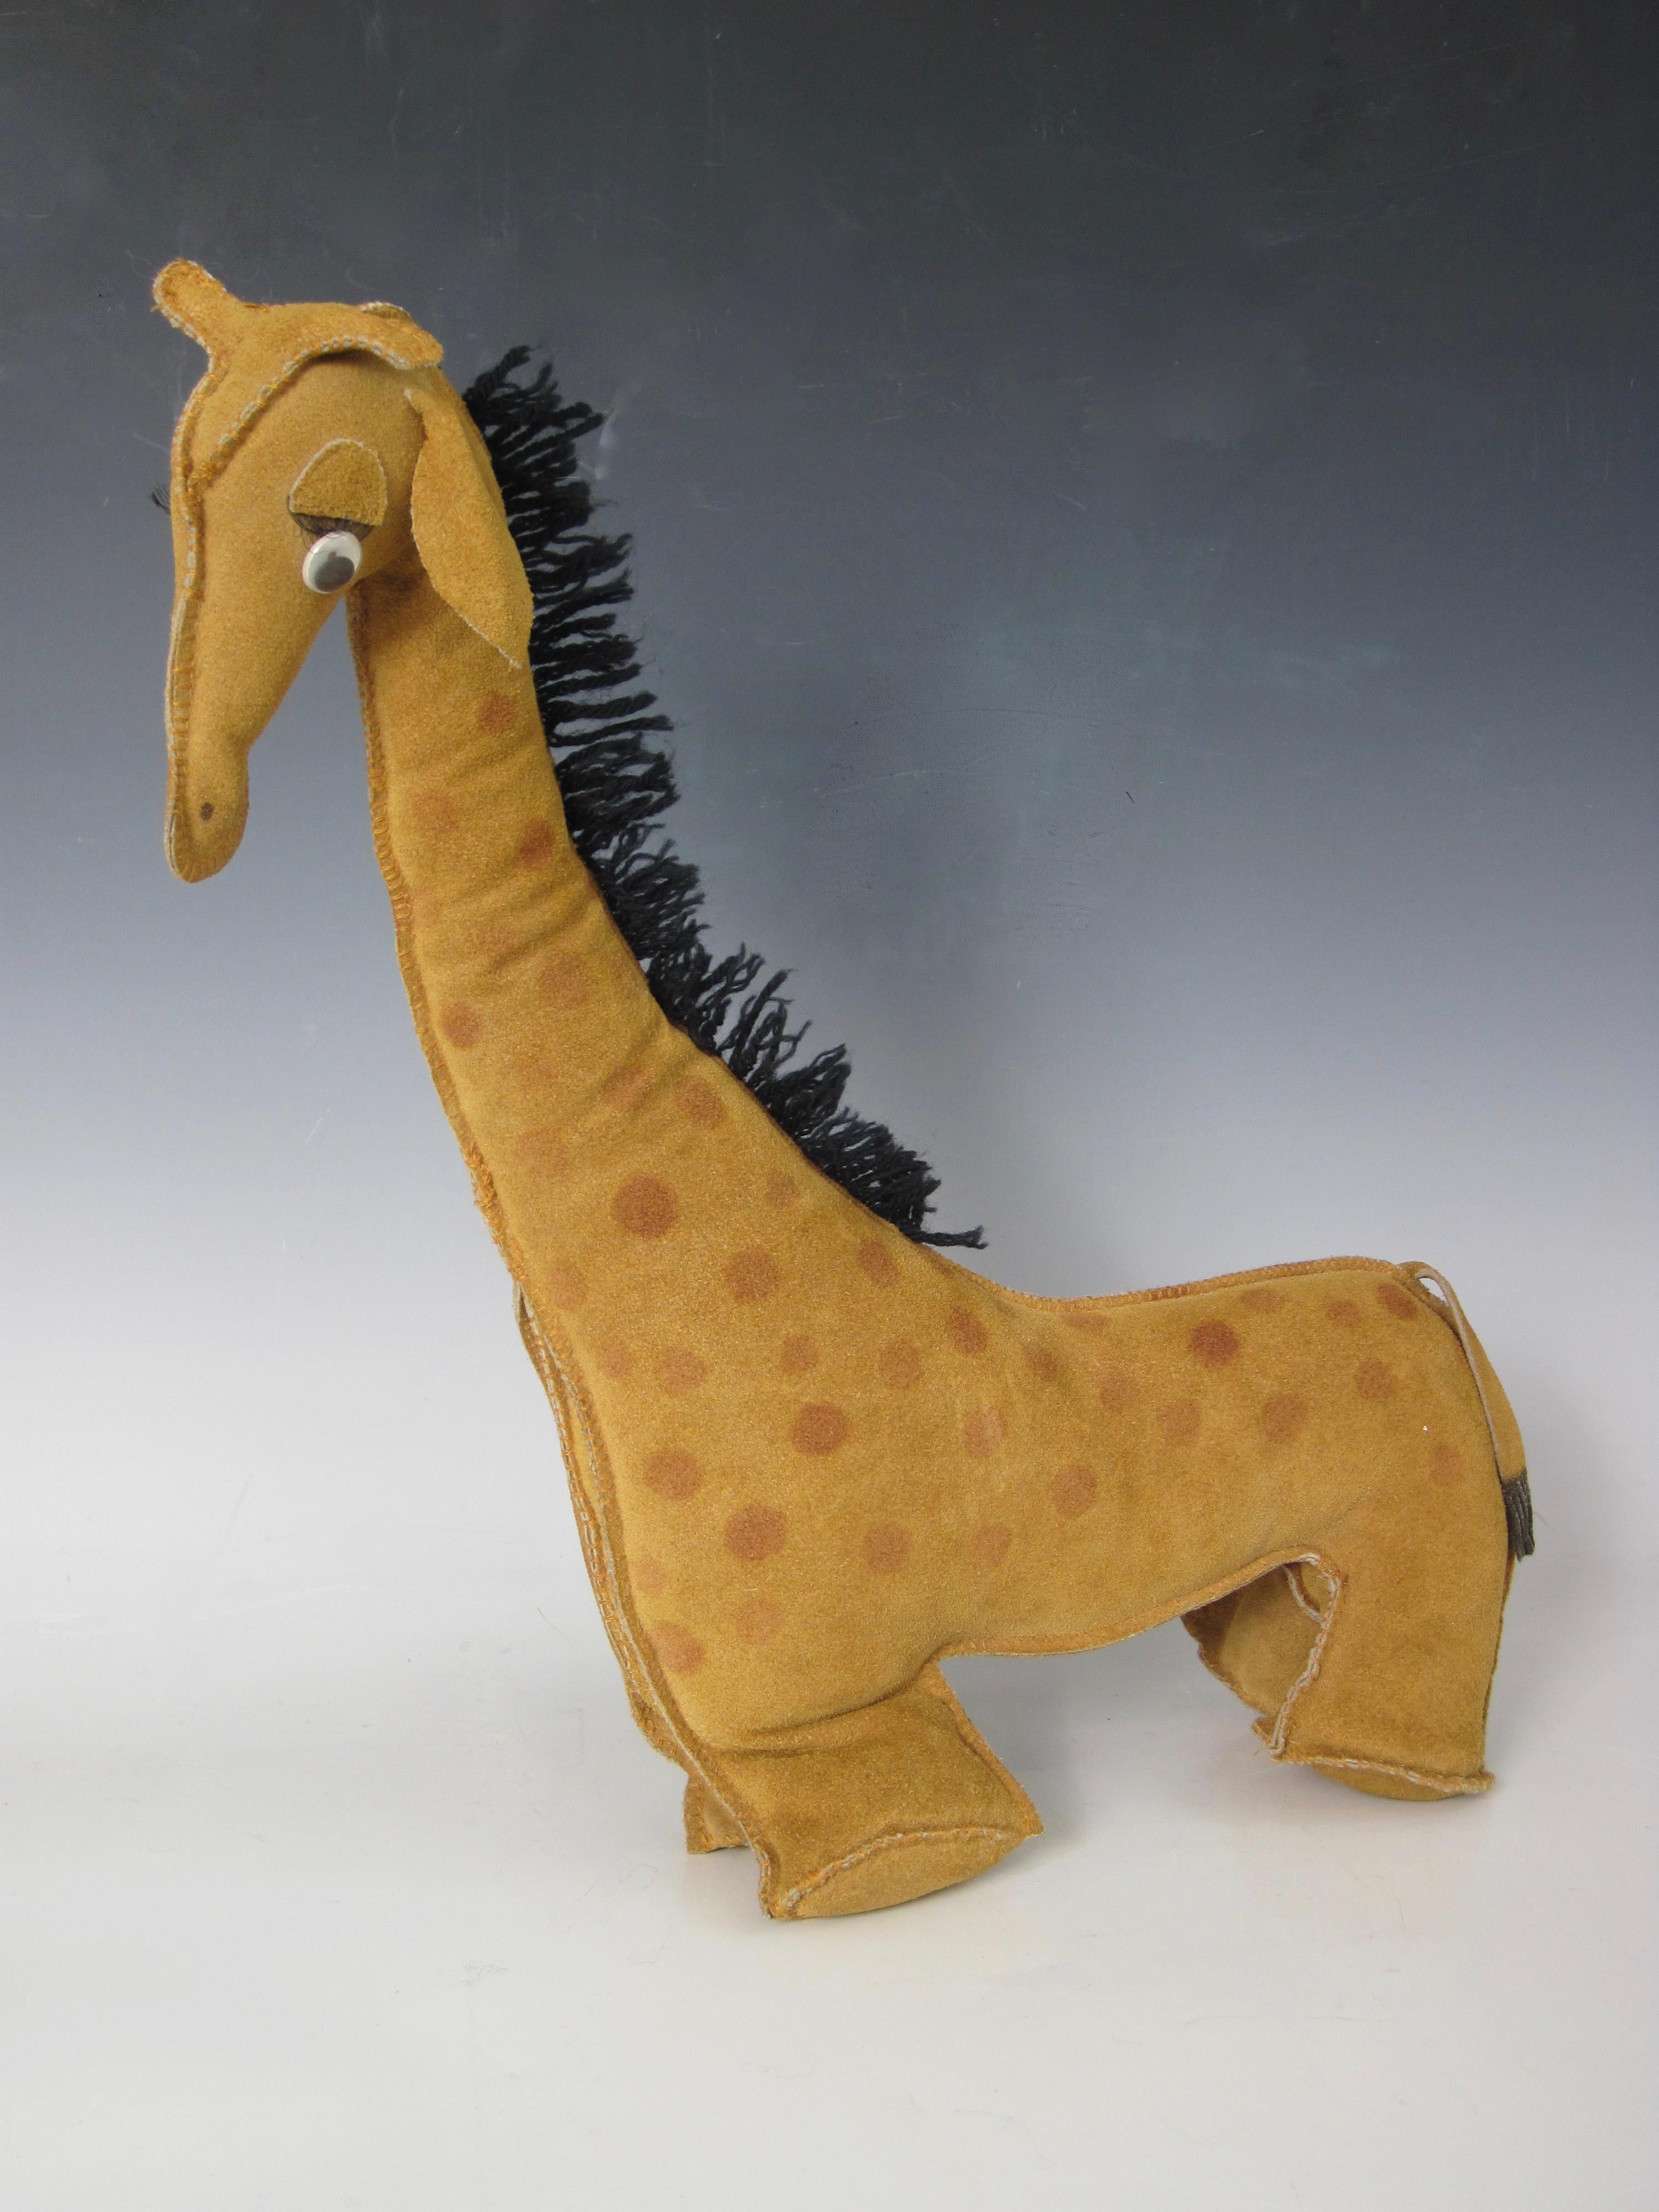 Hand-Crafted Folk Art Suede Leather Giraffe Stuffed Animal For Sale